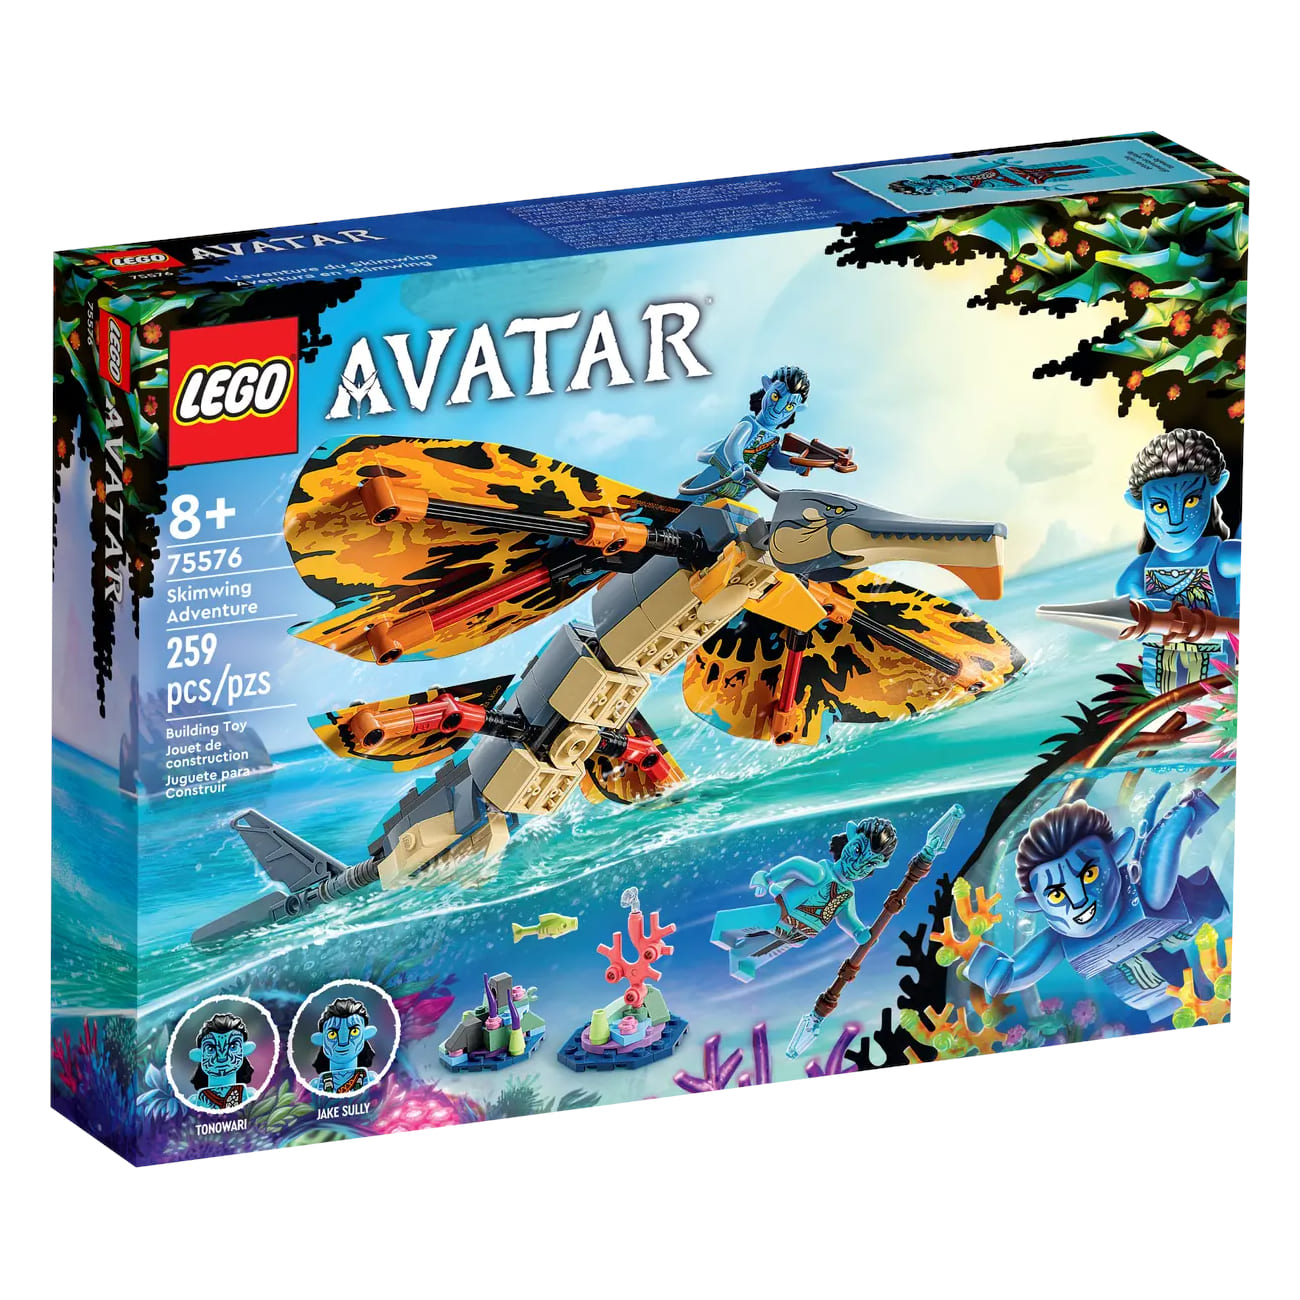 Конструктор LEGO Avatar Skimwing Adventure 75576, 259 деталей конструктор lego avatar 75576 skimwing adventure 259 дет